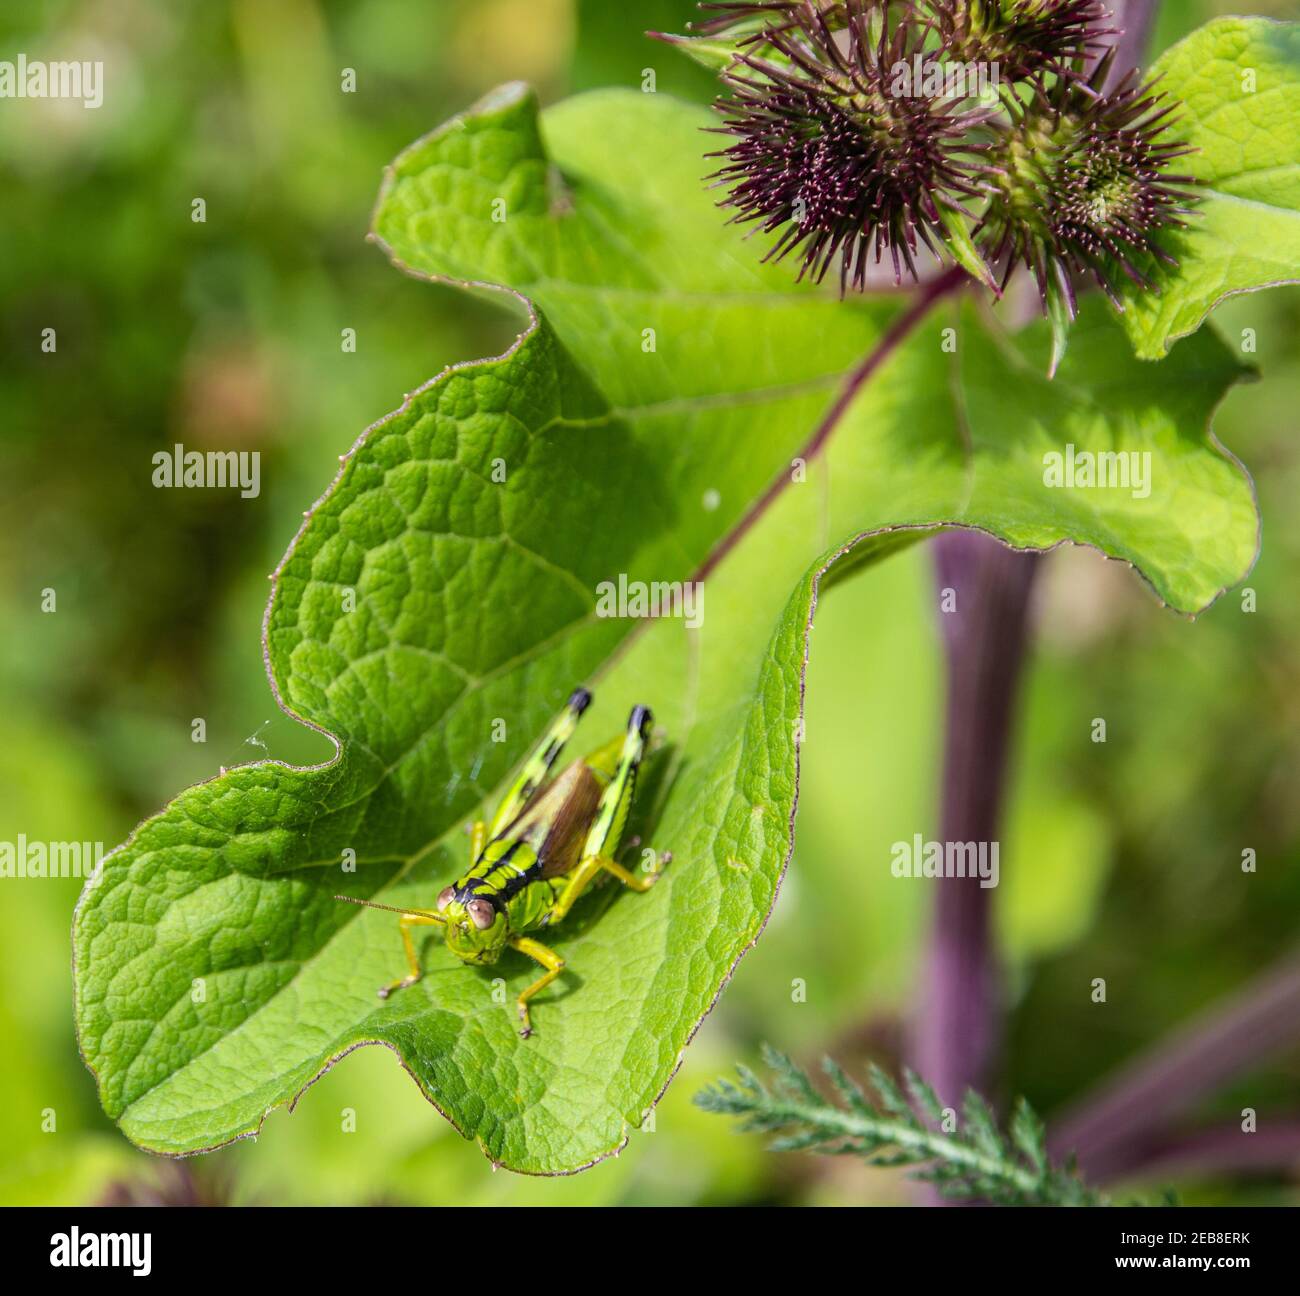 Alpine Miramella Grasshopper on the green leaf. Selective focus Stock Photo